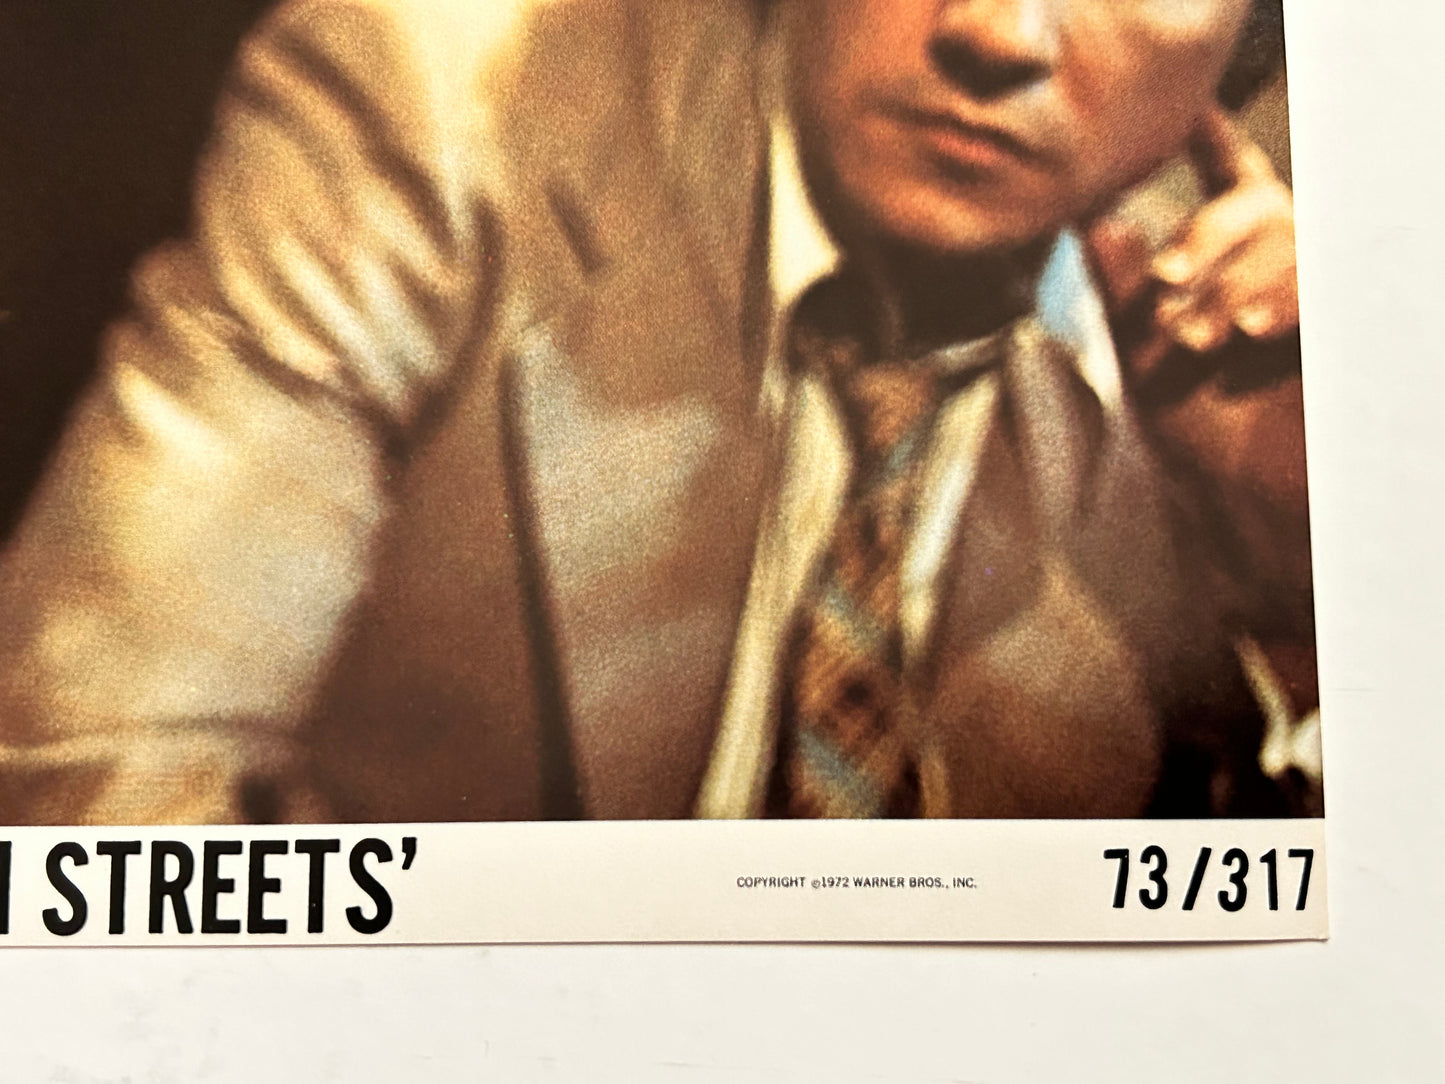 Mean Streets 8x10 Color Still #7 1973